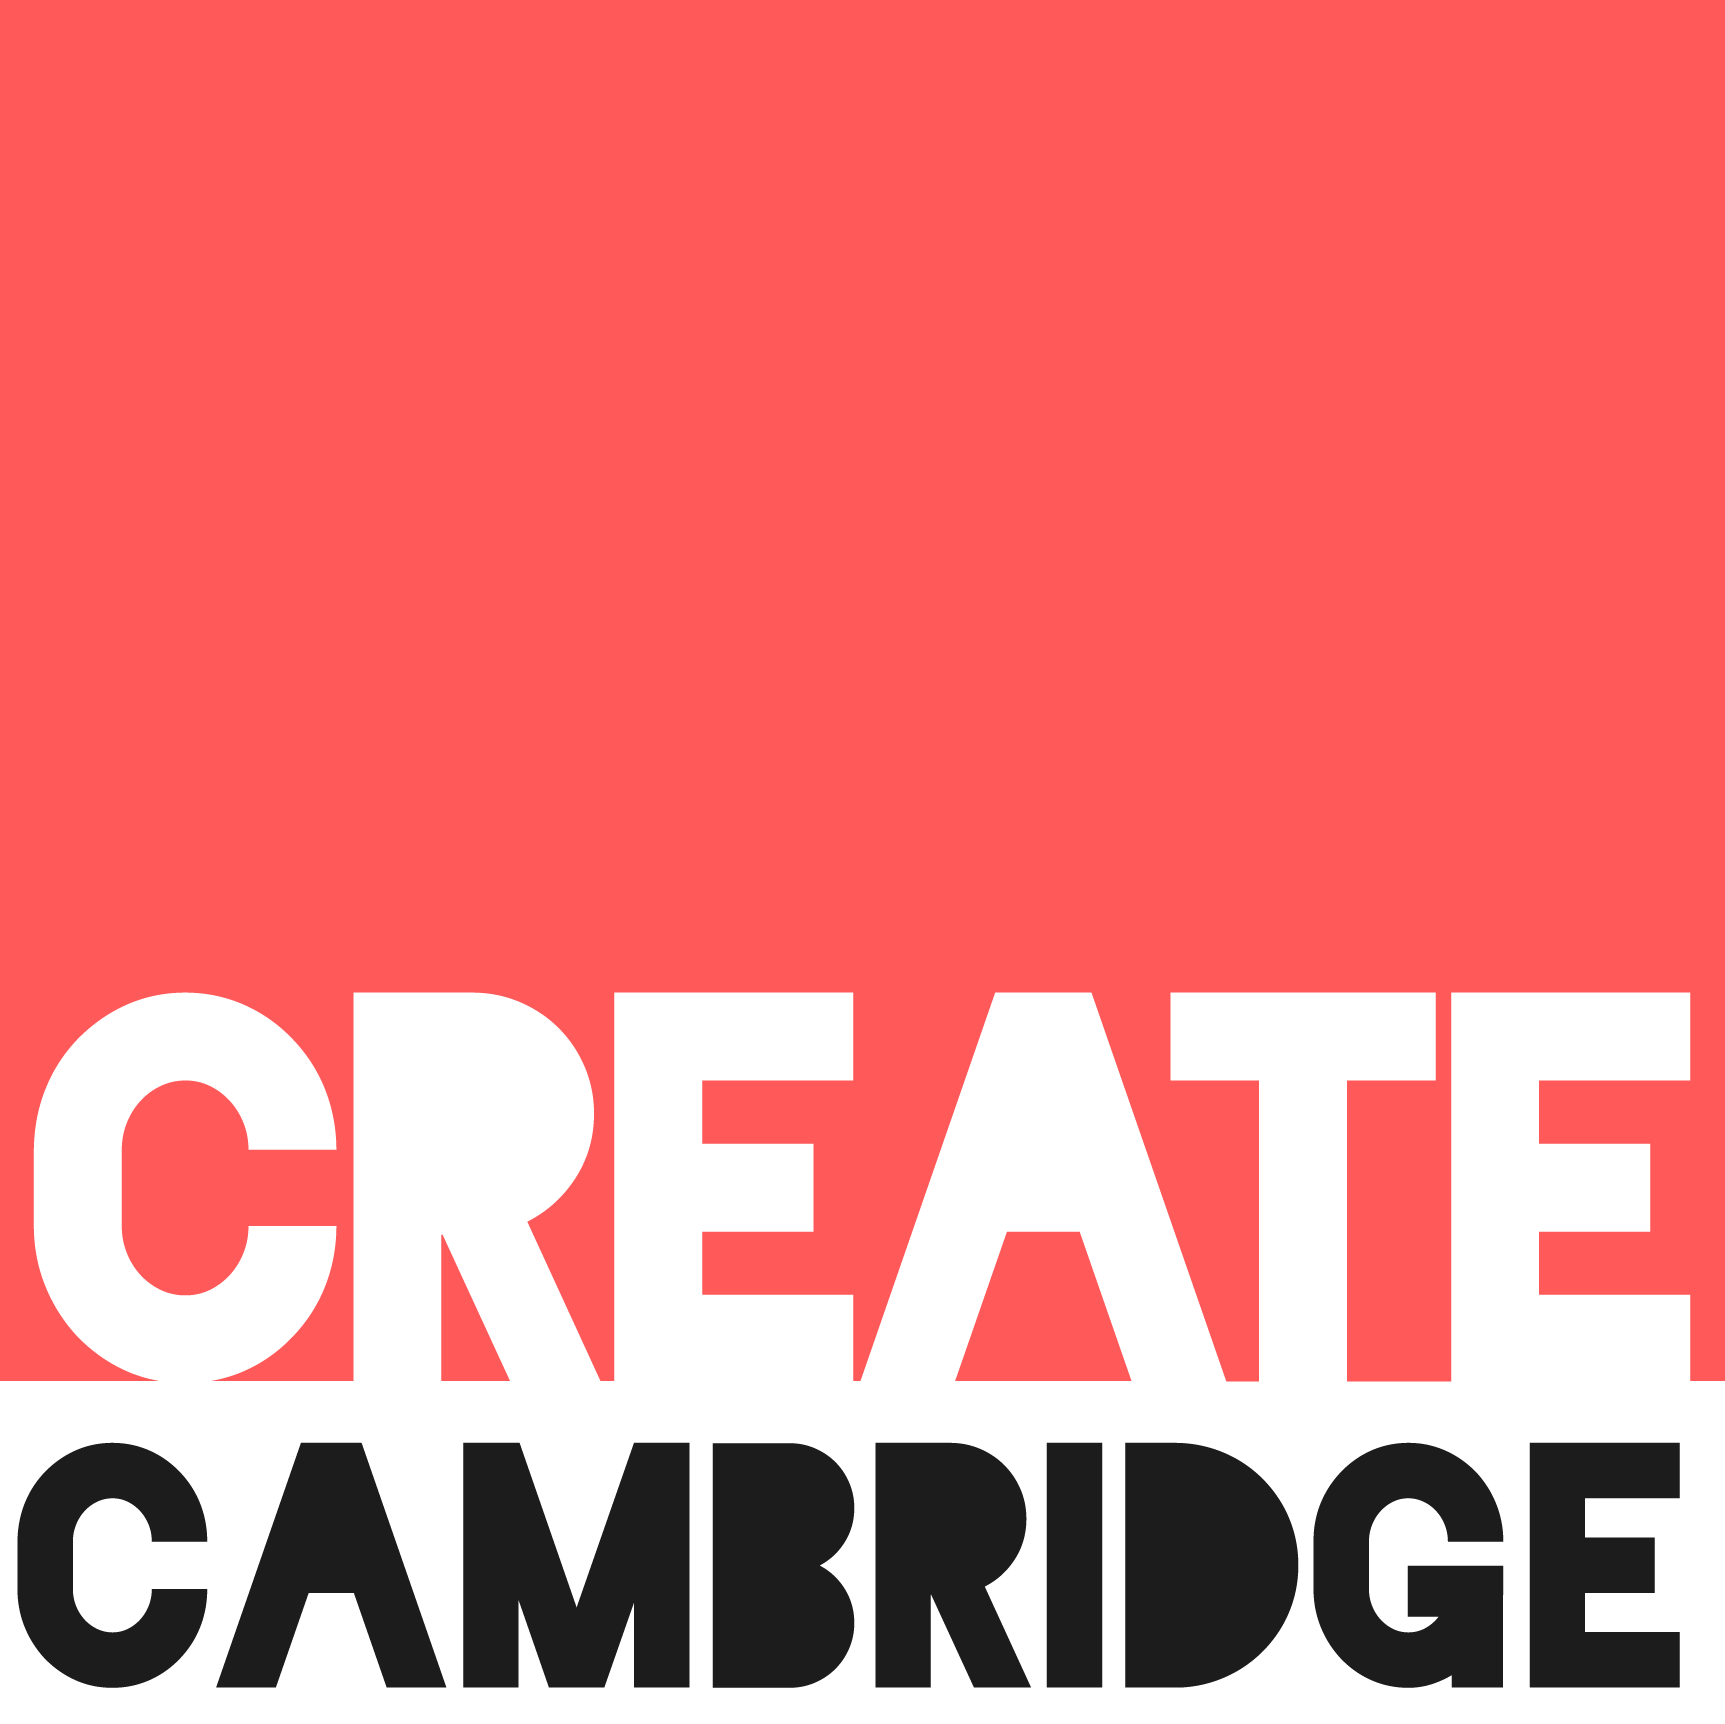 We Create Cambridge